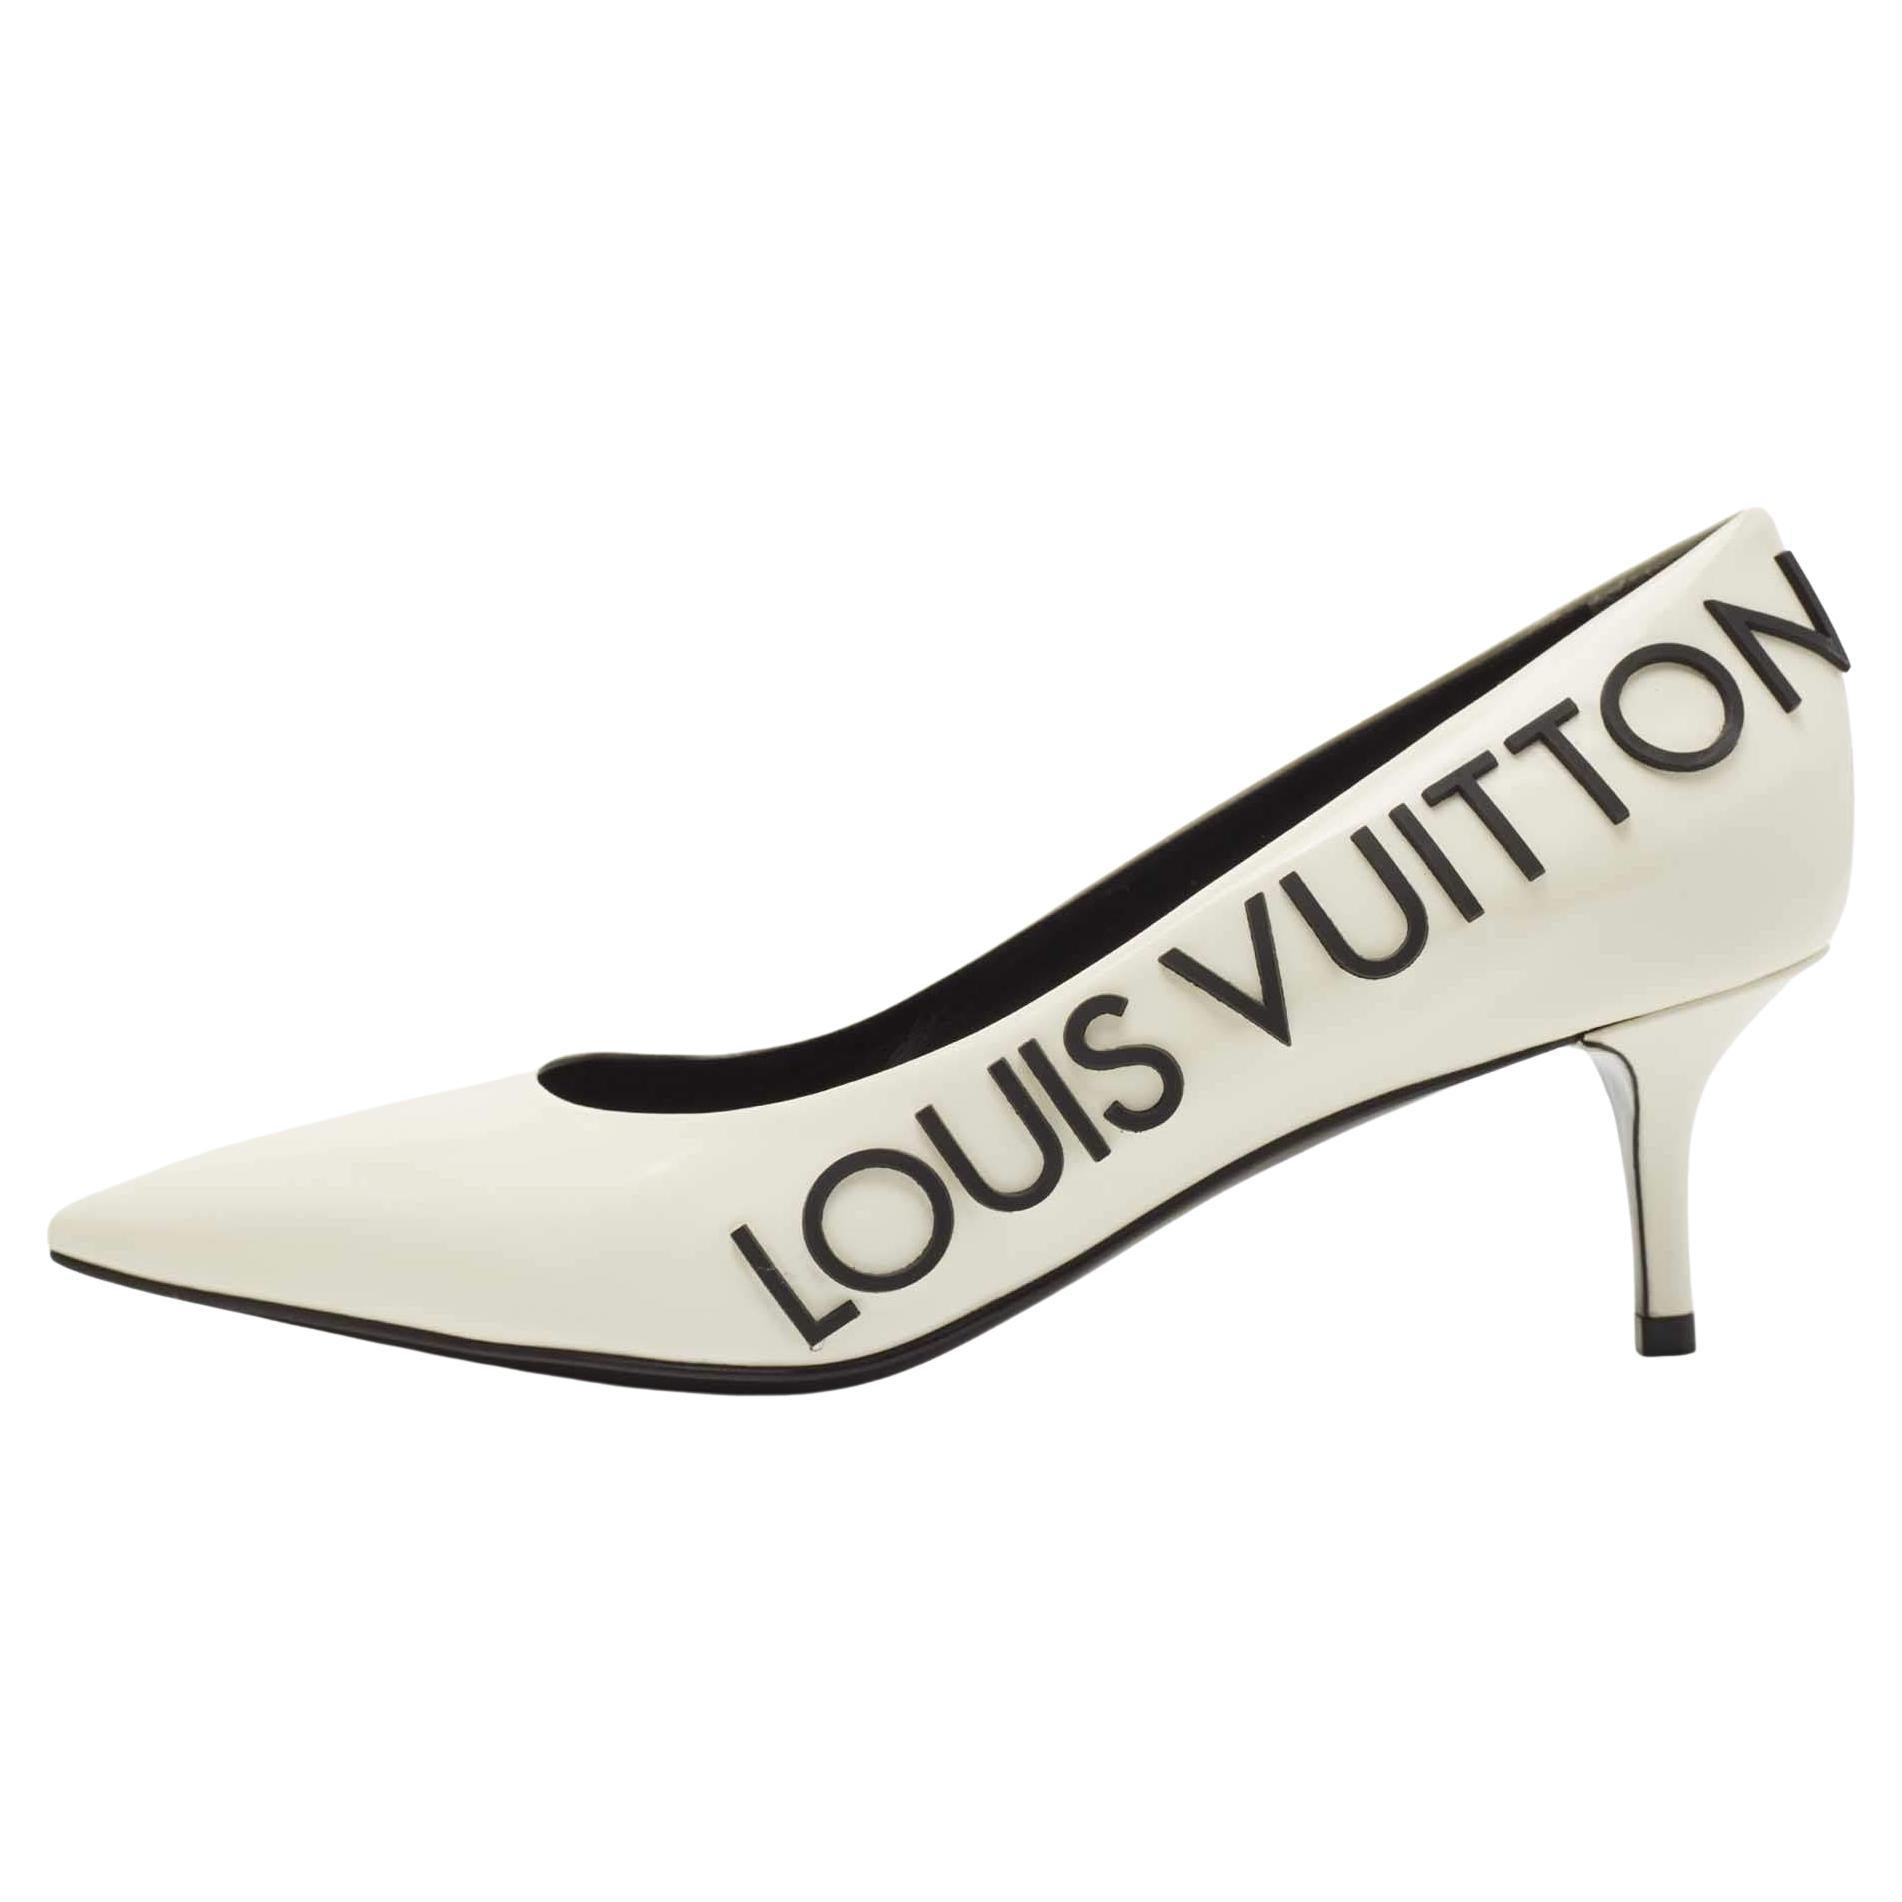 Louis Vuitton White Leather Buckle Kitten Heels Sandals Size 37.5